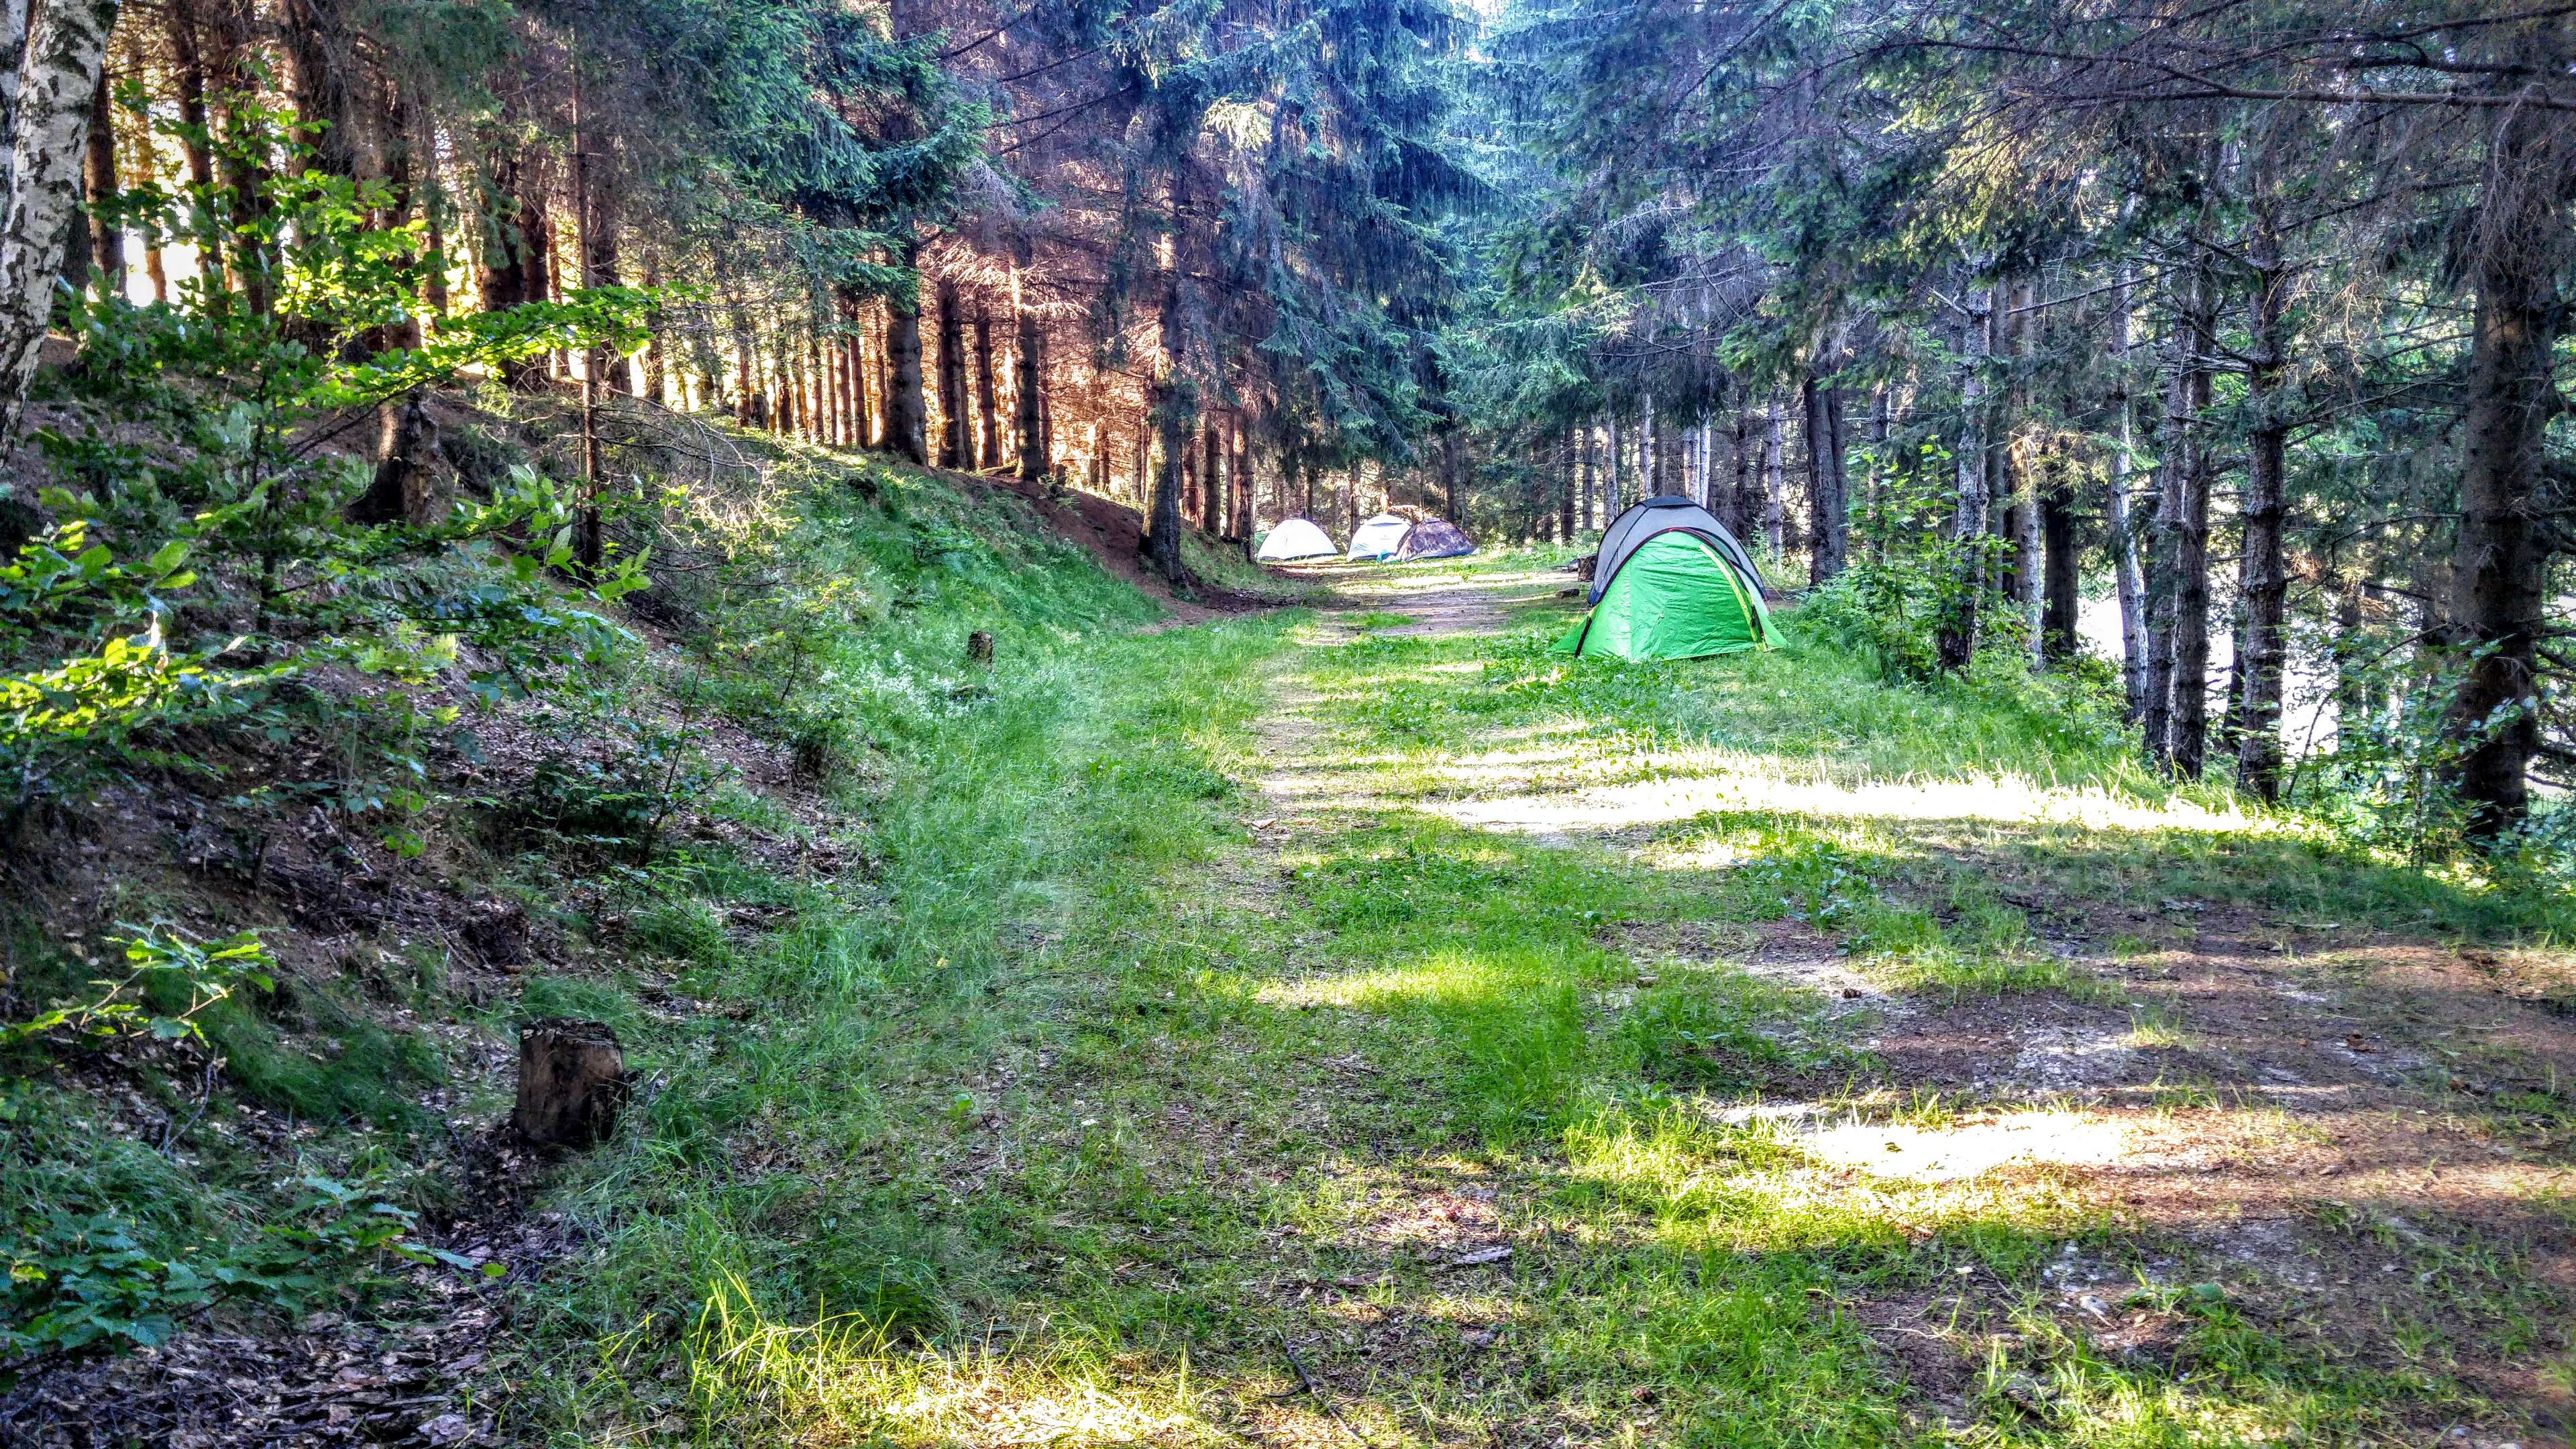 3840x2160 camping, forest 4k wallpaper JPG 1908 kB